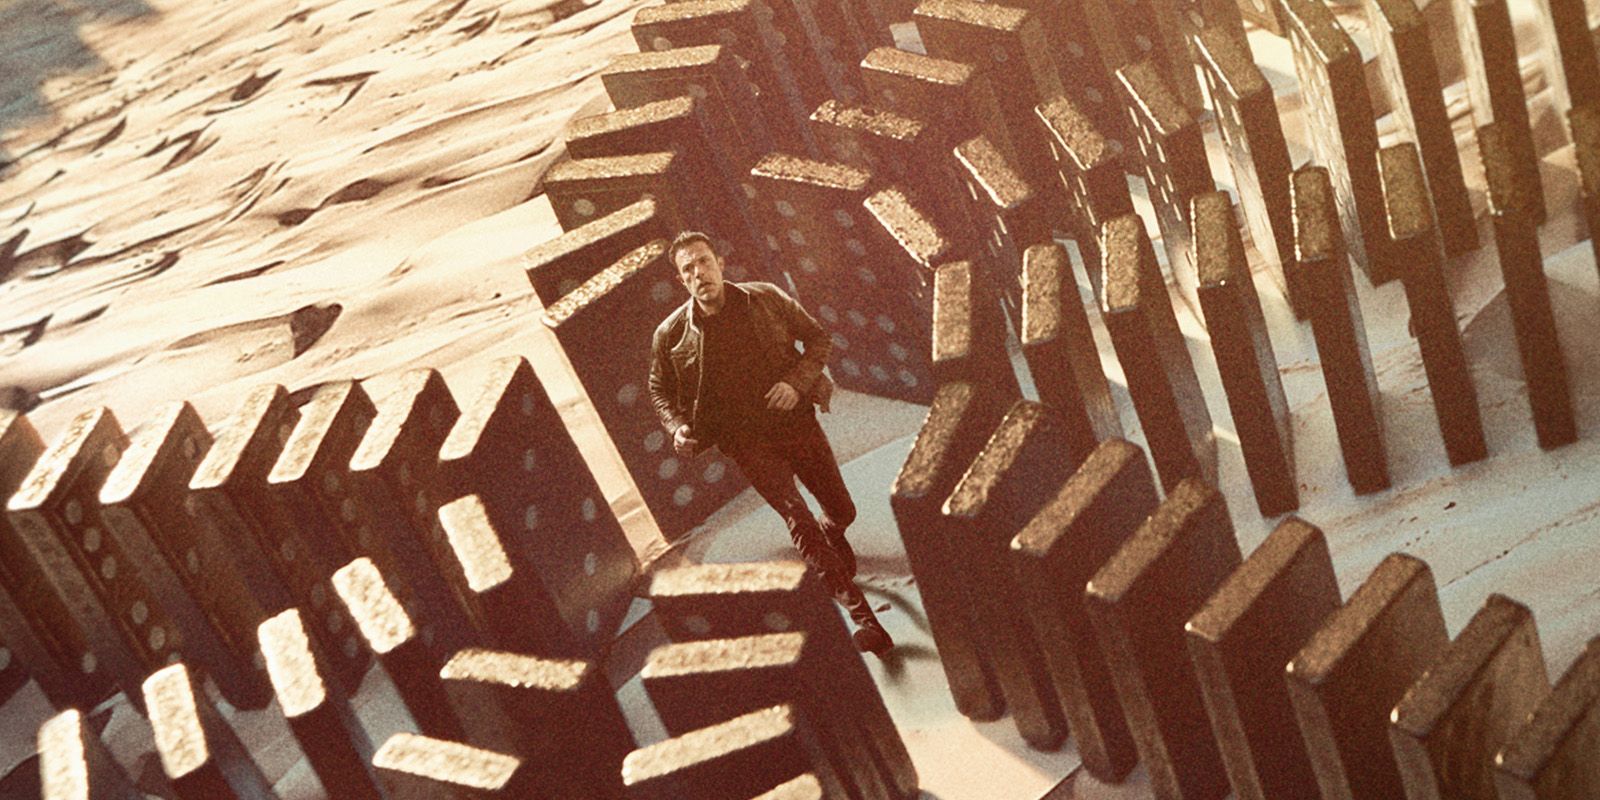 An image of Ben Affleck running through a maze on the Hypnotic poster